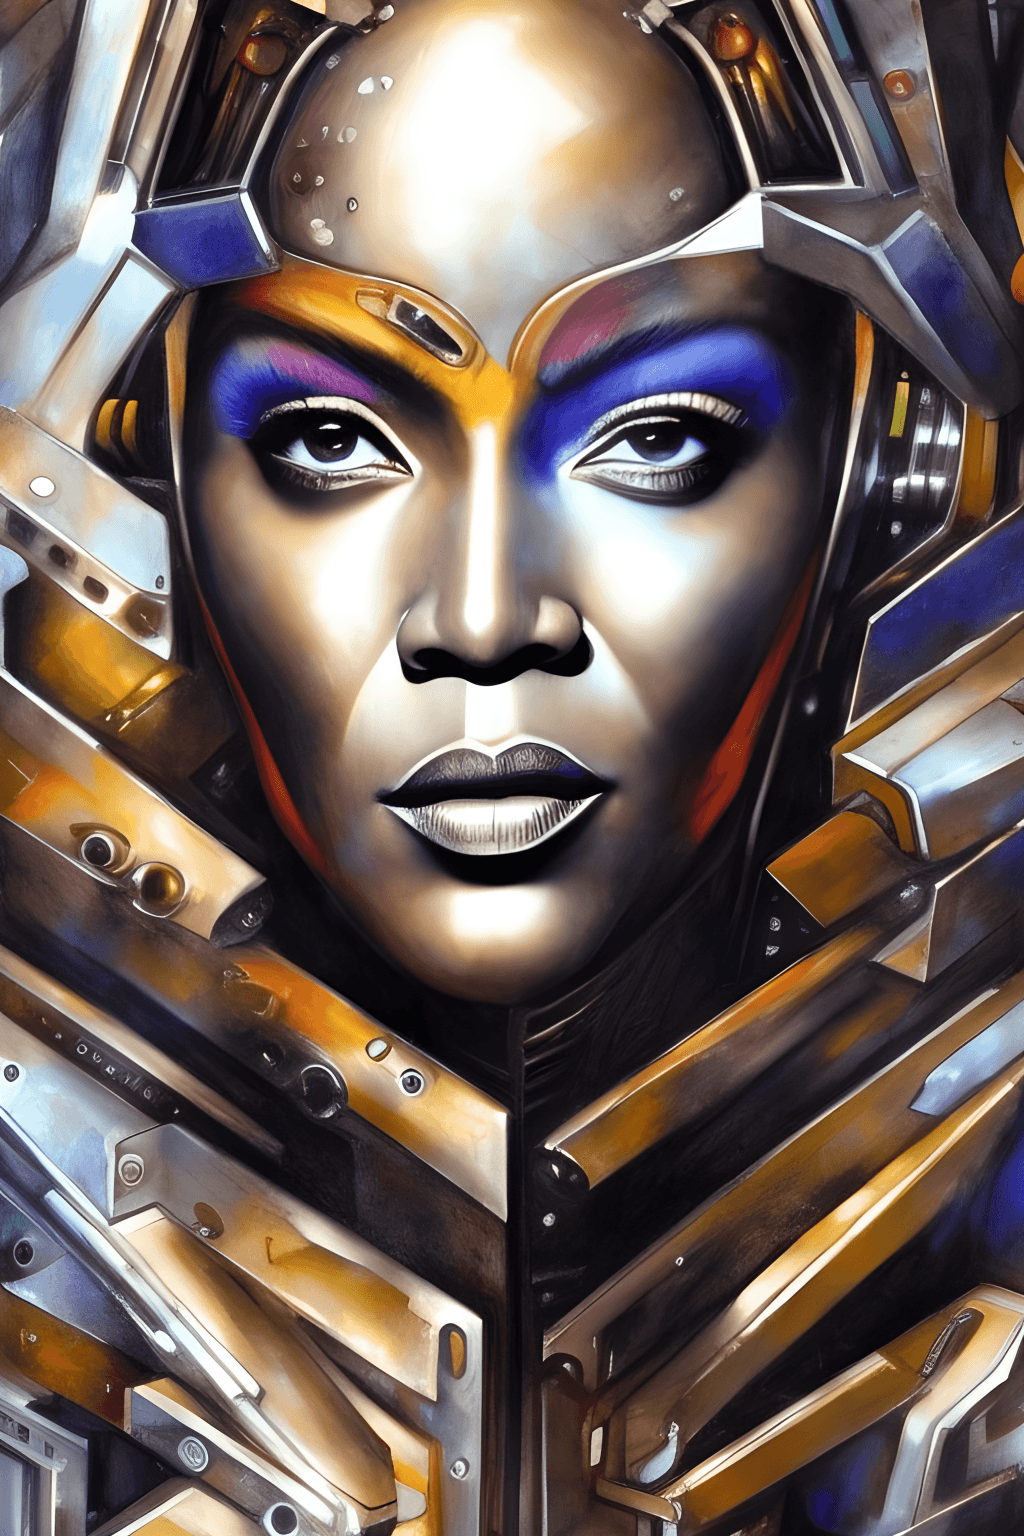 Beyoncé As a Hyper Realistic Cyborg with a Huge Body in a Cyberpunk ...